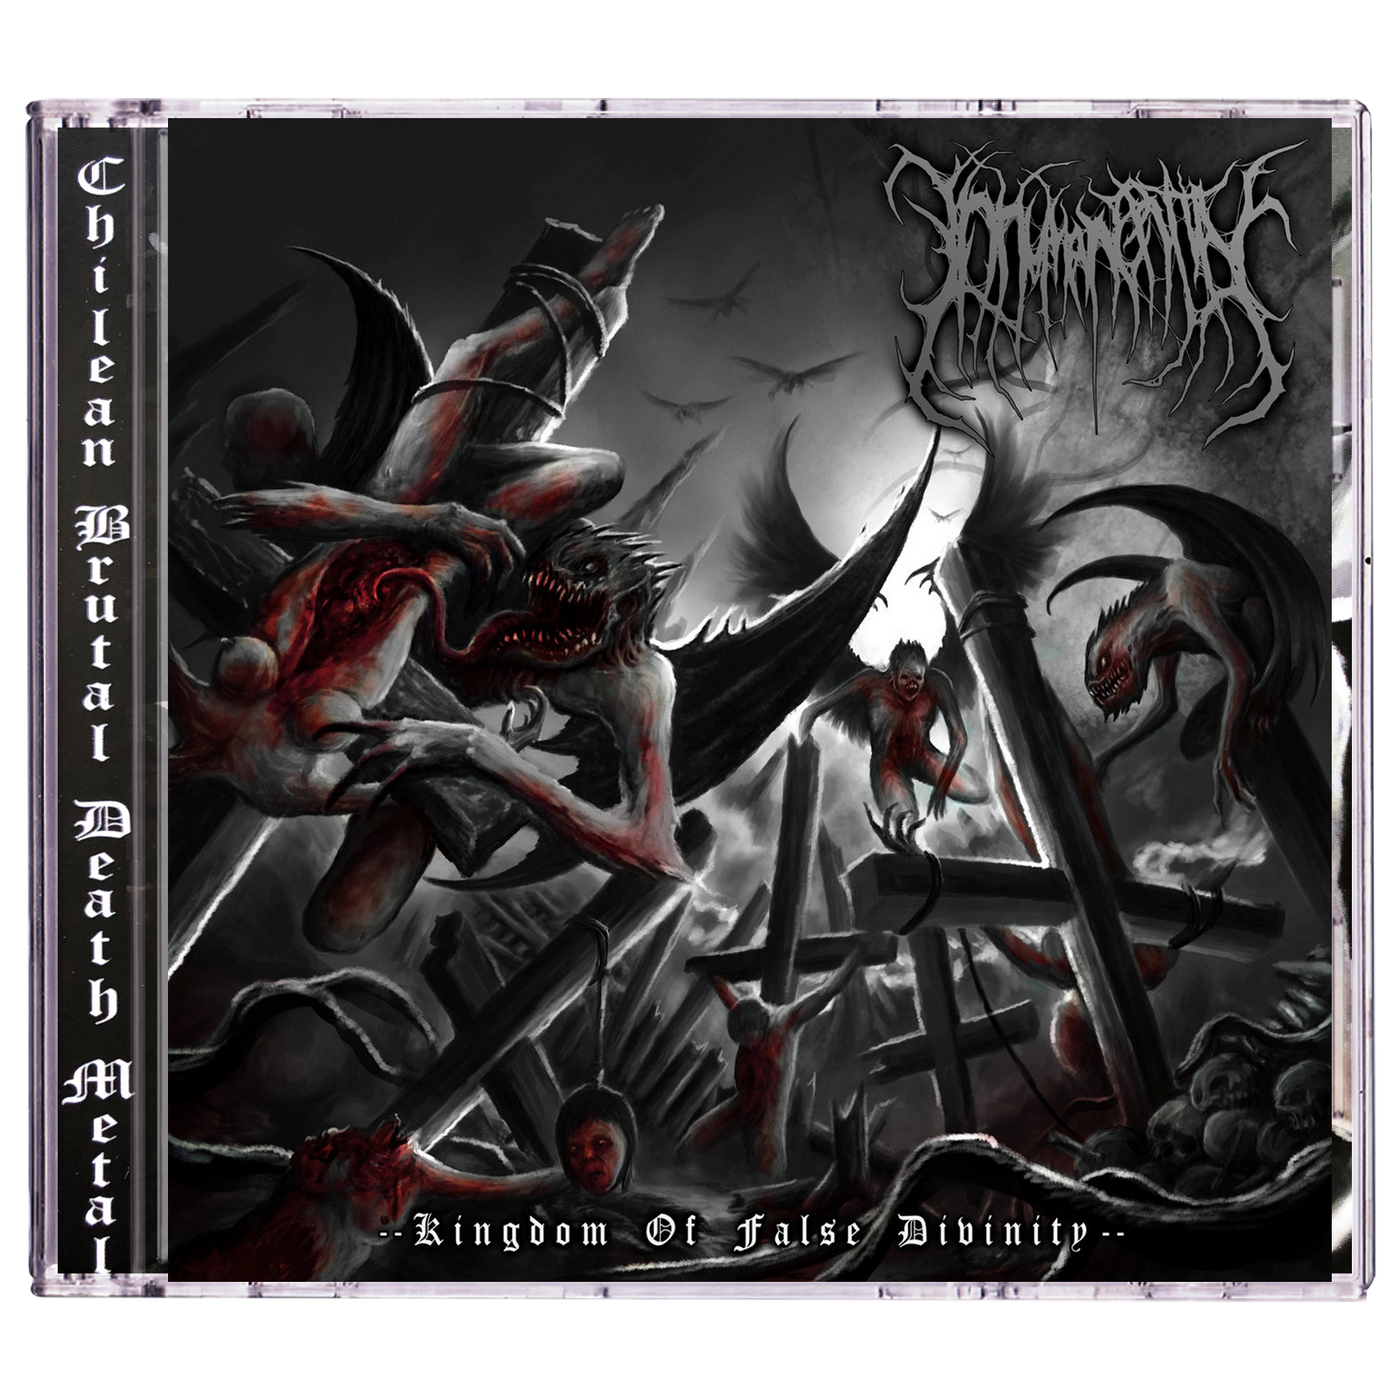 Inhuman Entity 'Kingdom of False Divinity' CD